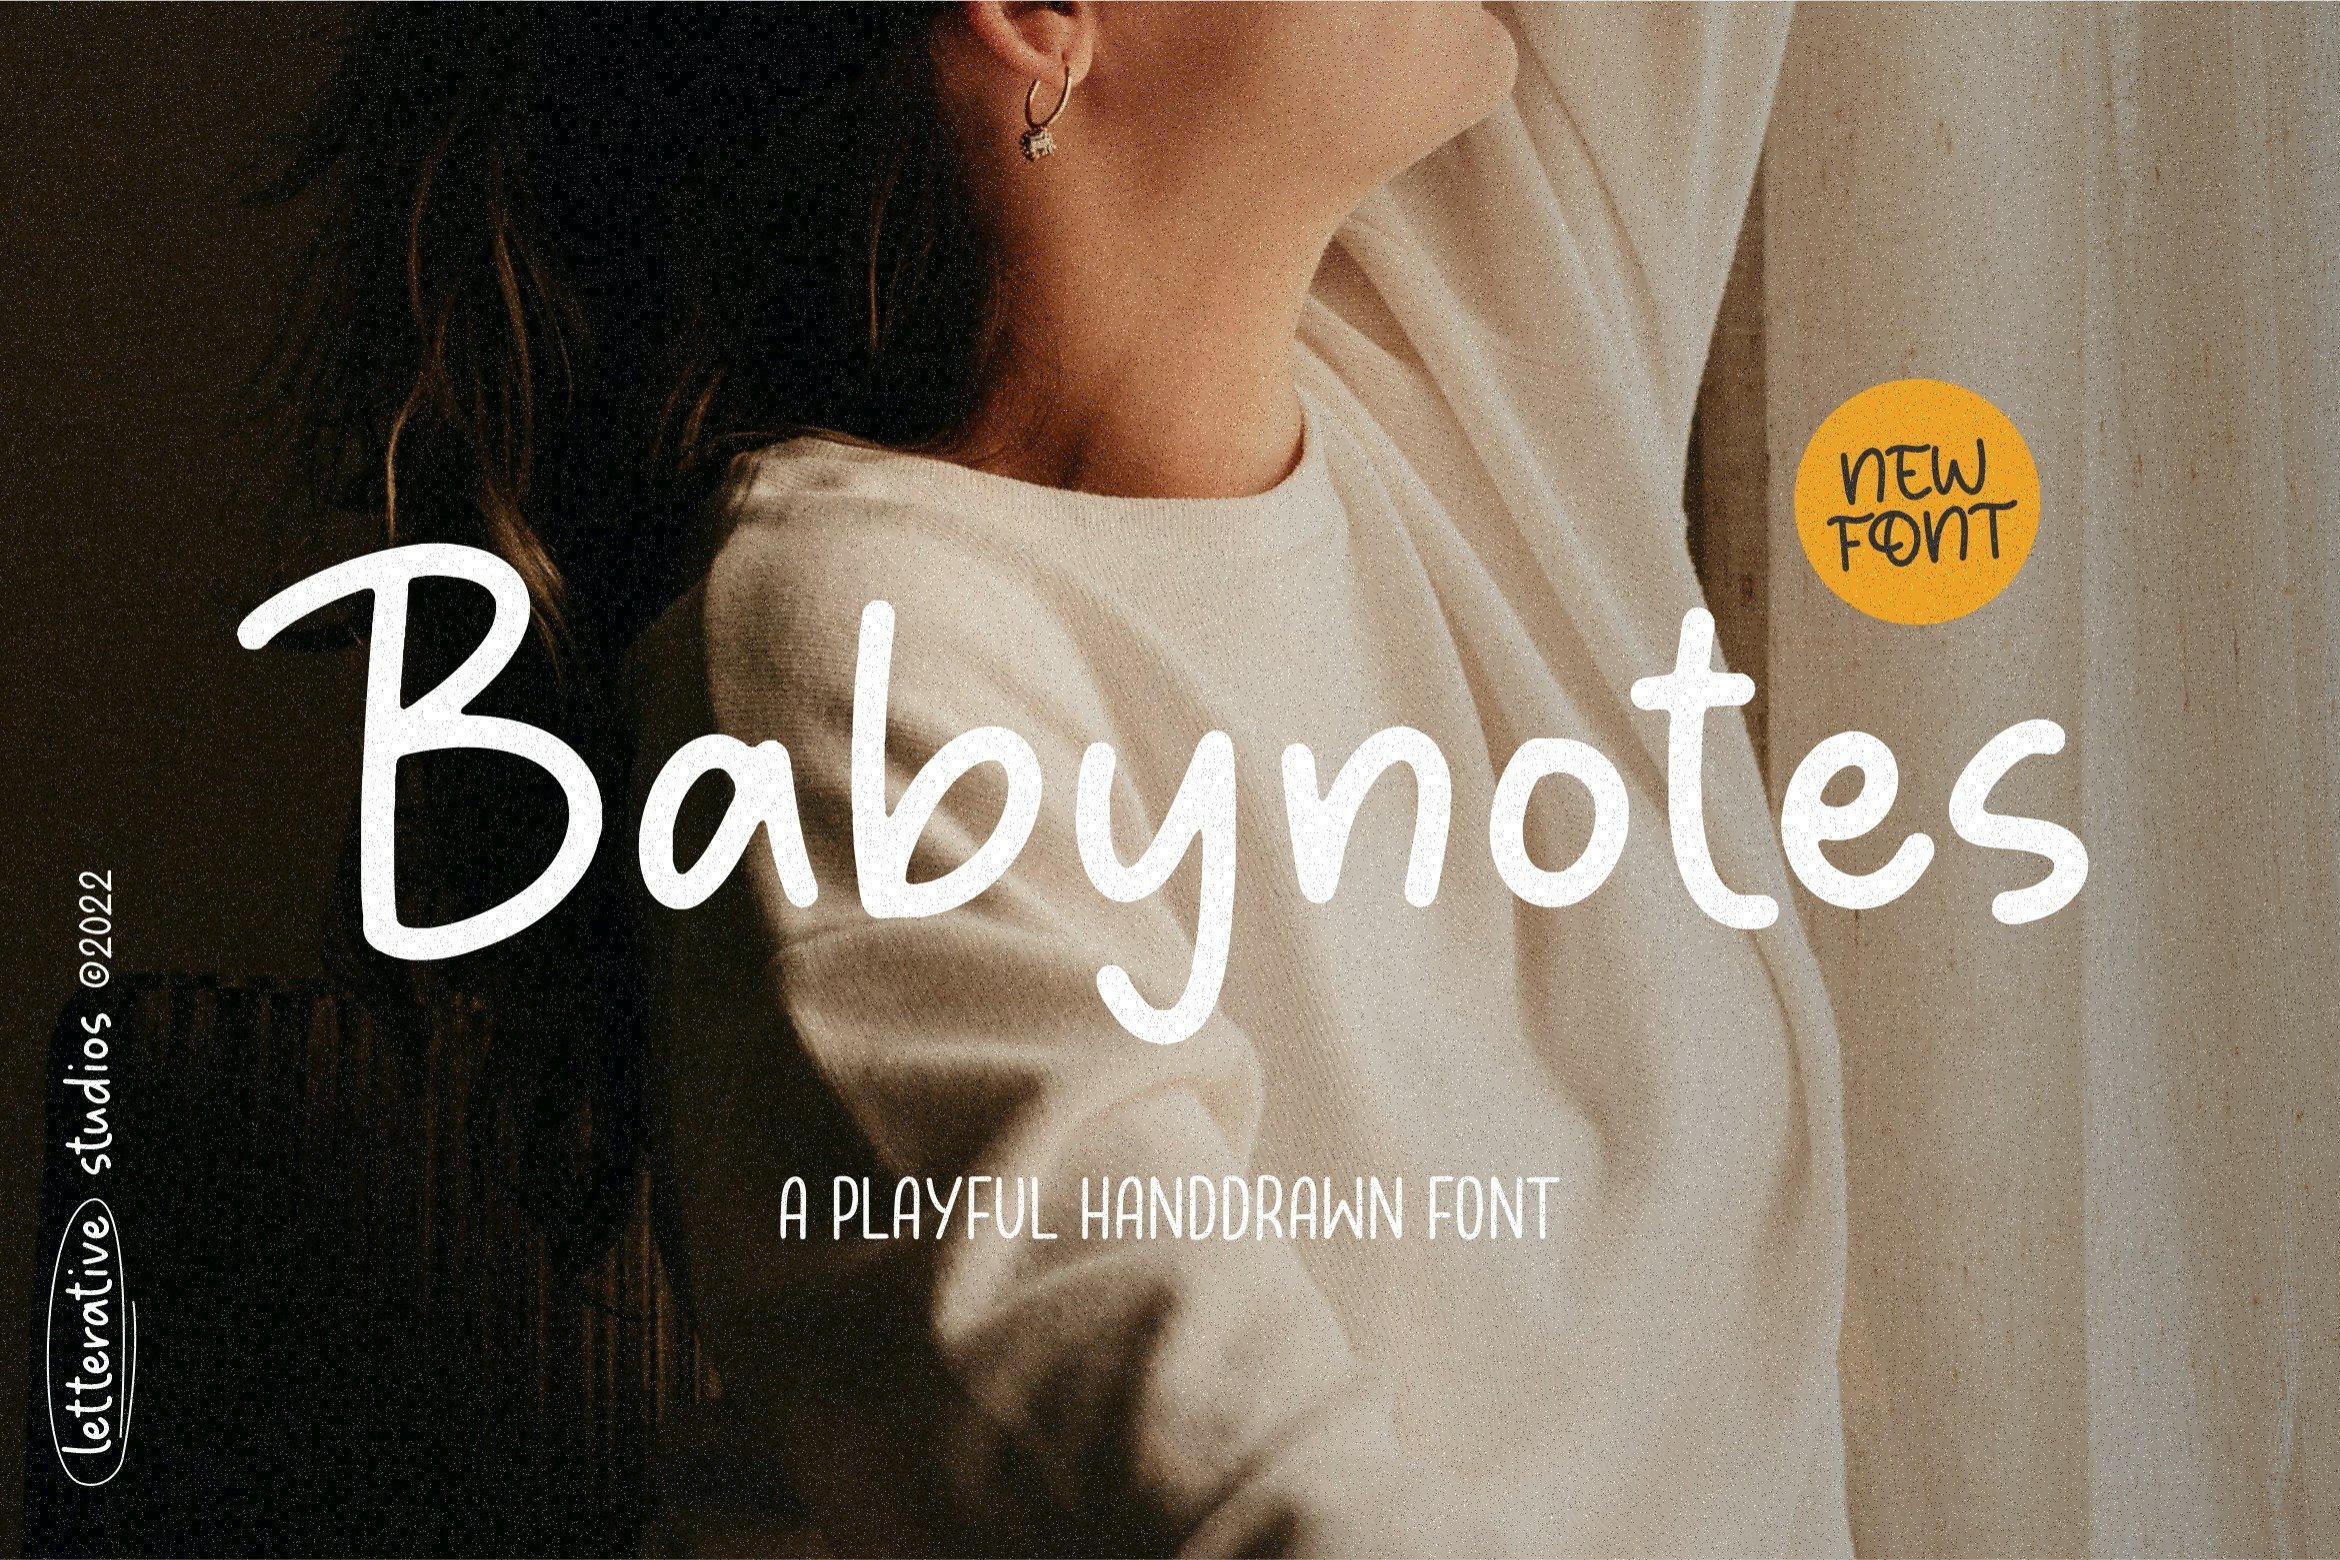 Babynotes Playful Handdrawn Font7